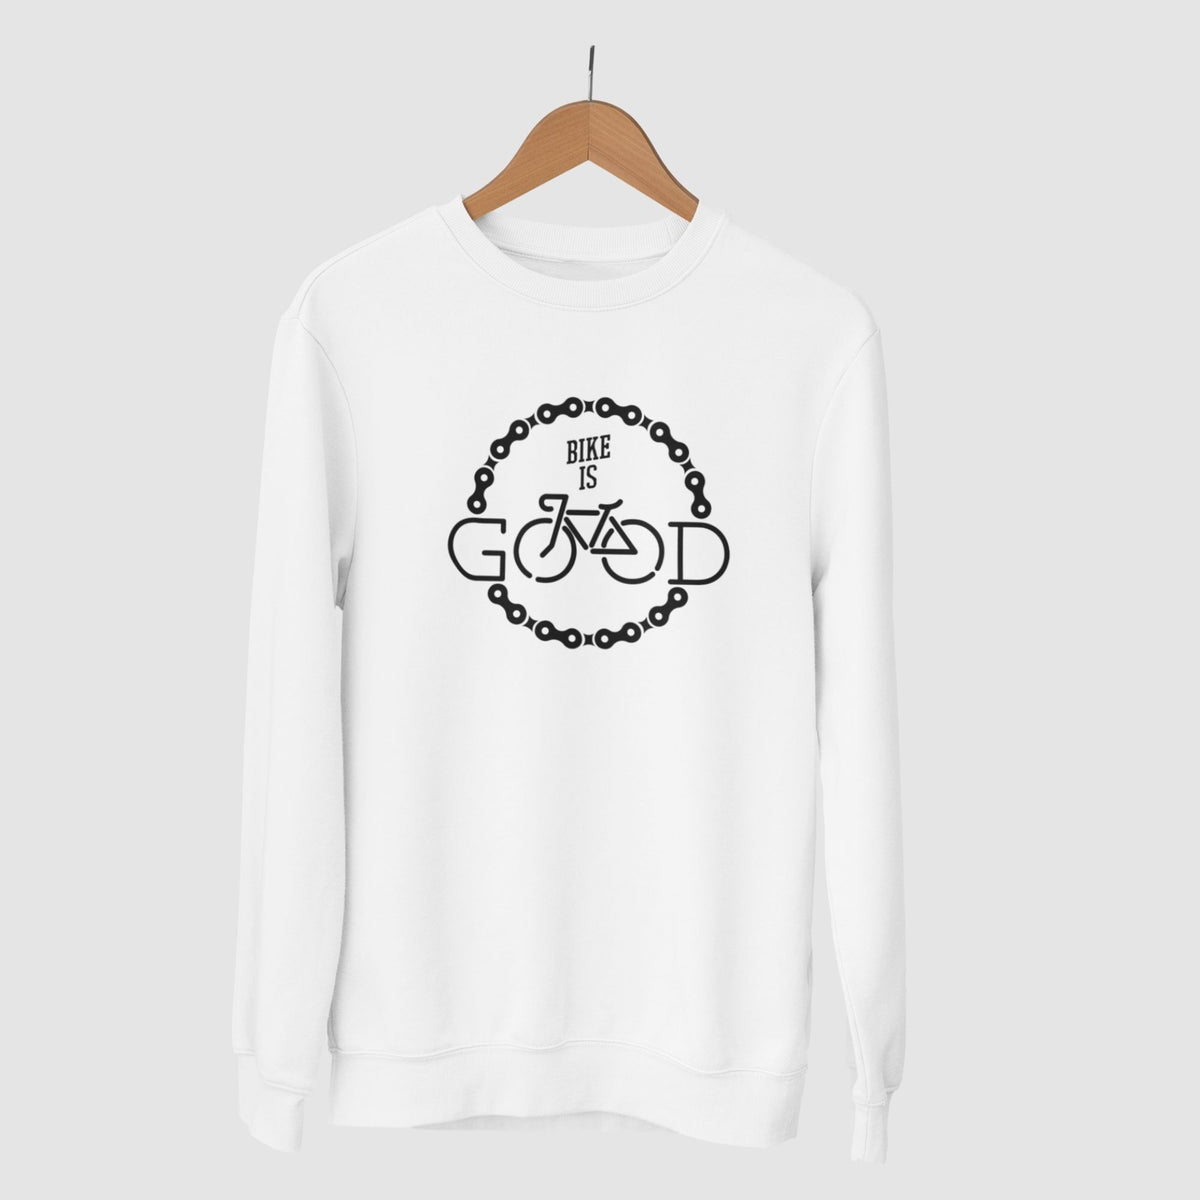 bike-is-good-cotton-printed-unisex-white-sweatshirt-gogirgit-com